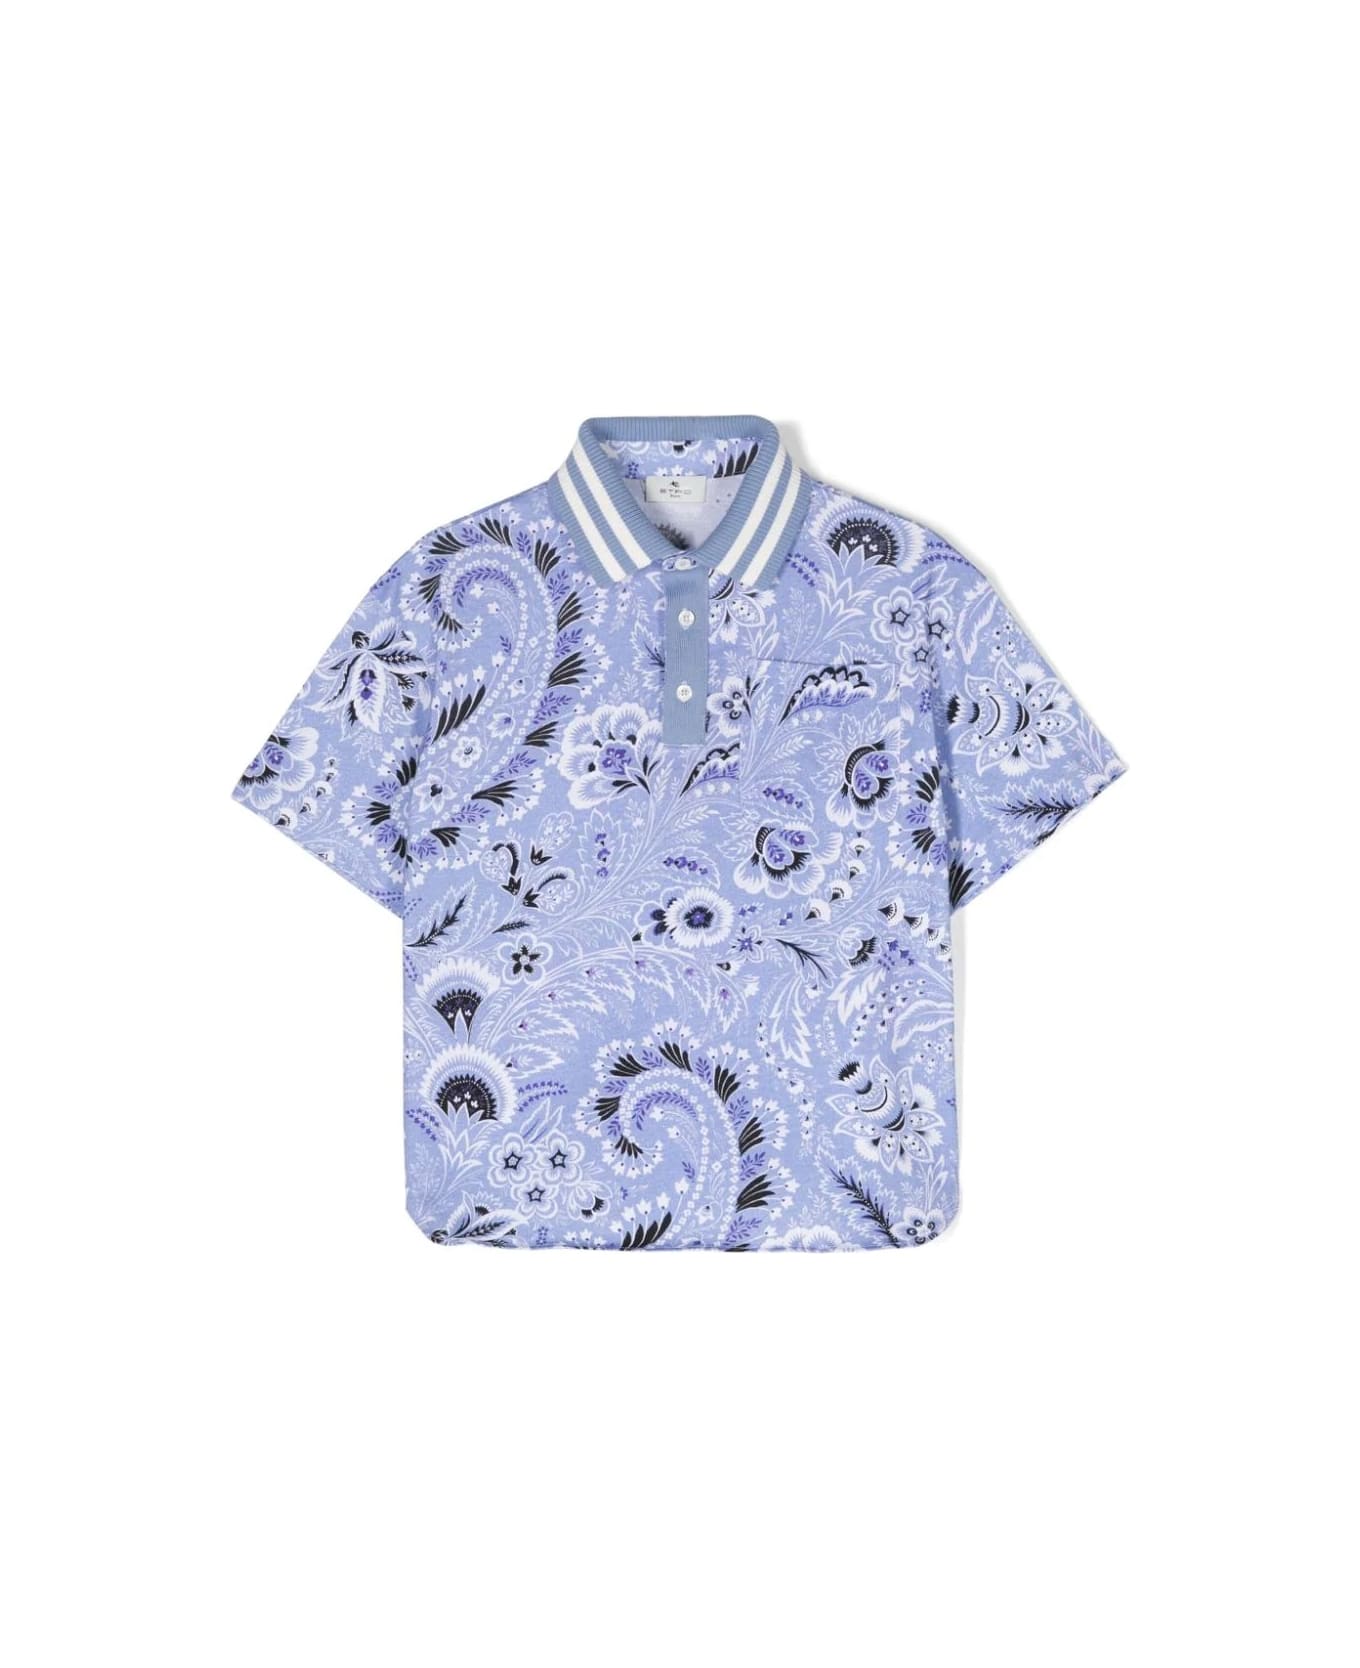 Etro Light Blue Polo Shirt With Paisley Print - Blue